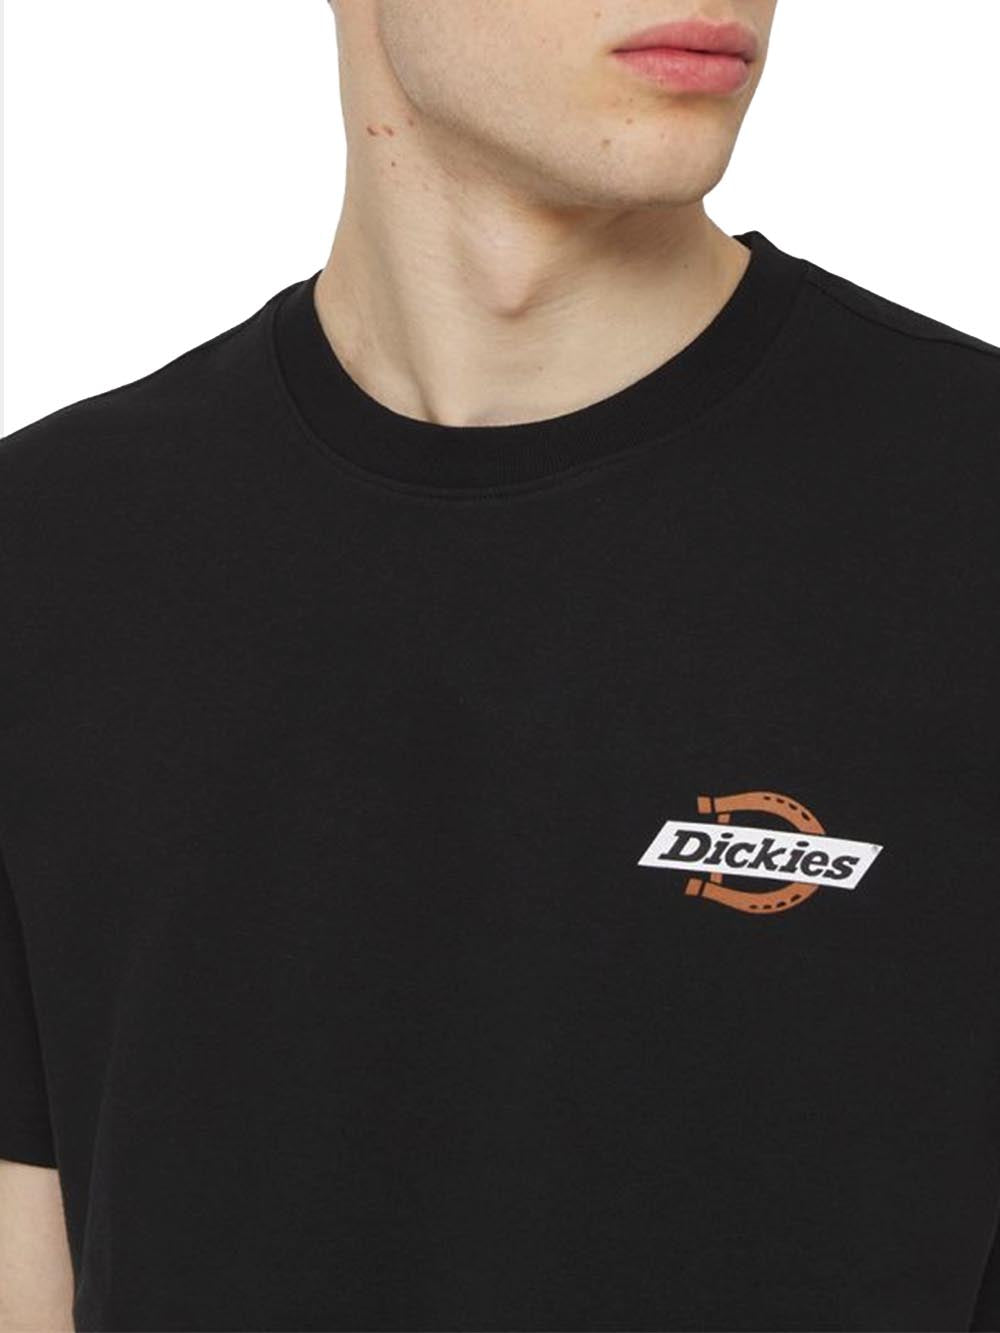 Dickies T-shirt Uomo Nero